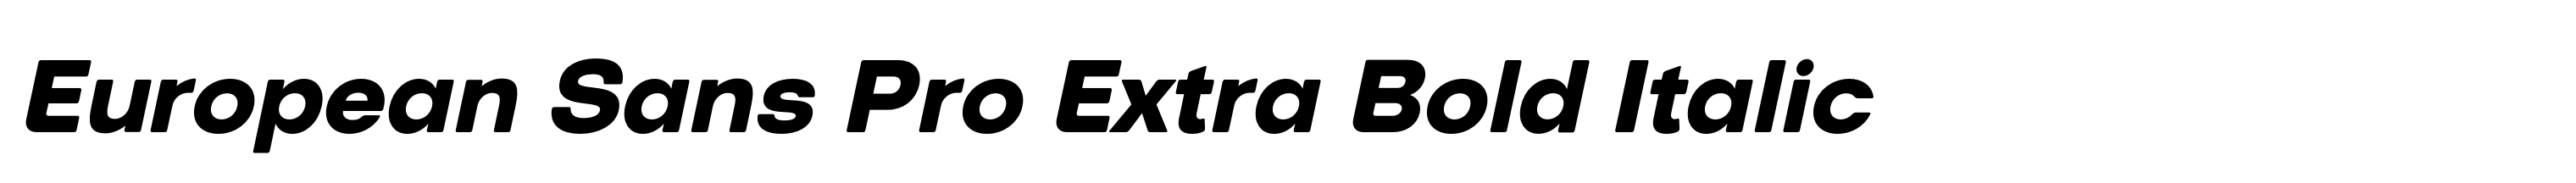 European Sans Pro Extra Bold Italic